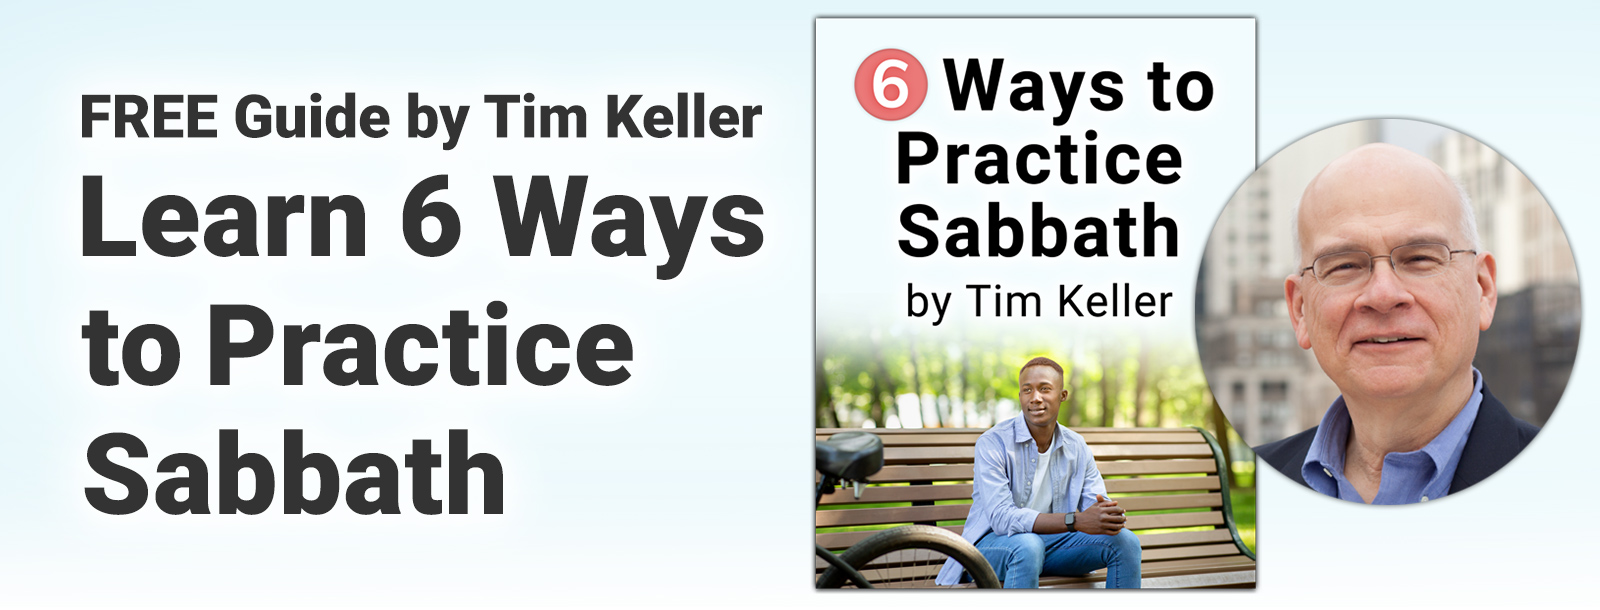 FREE Guide by Tim Keller | Learn 6 Ways to Practice Sabbath